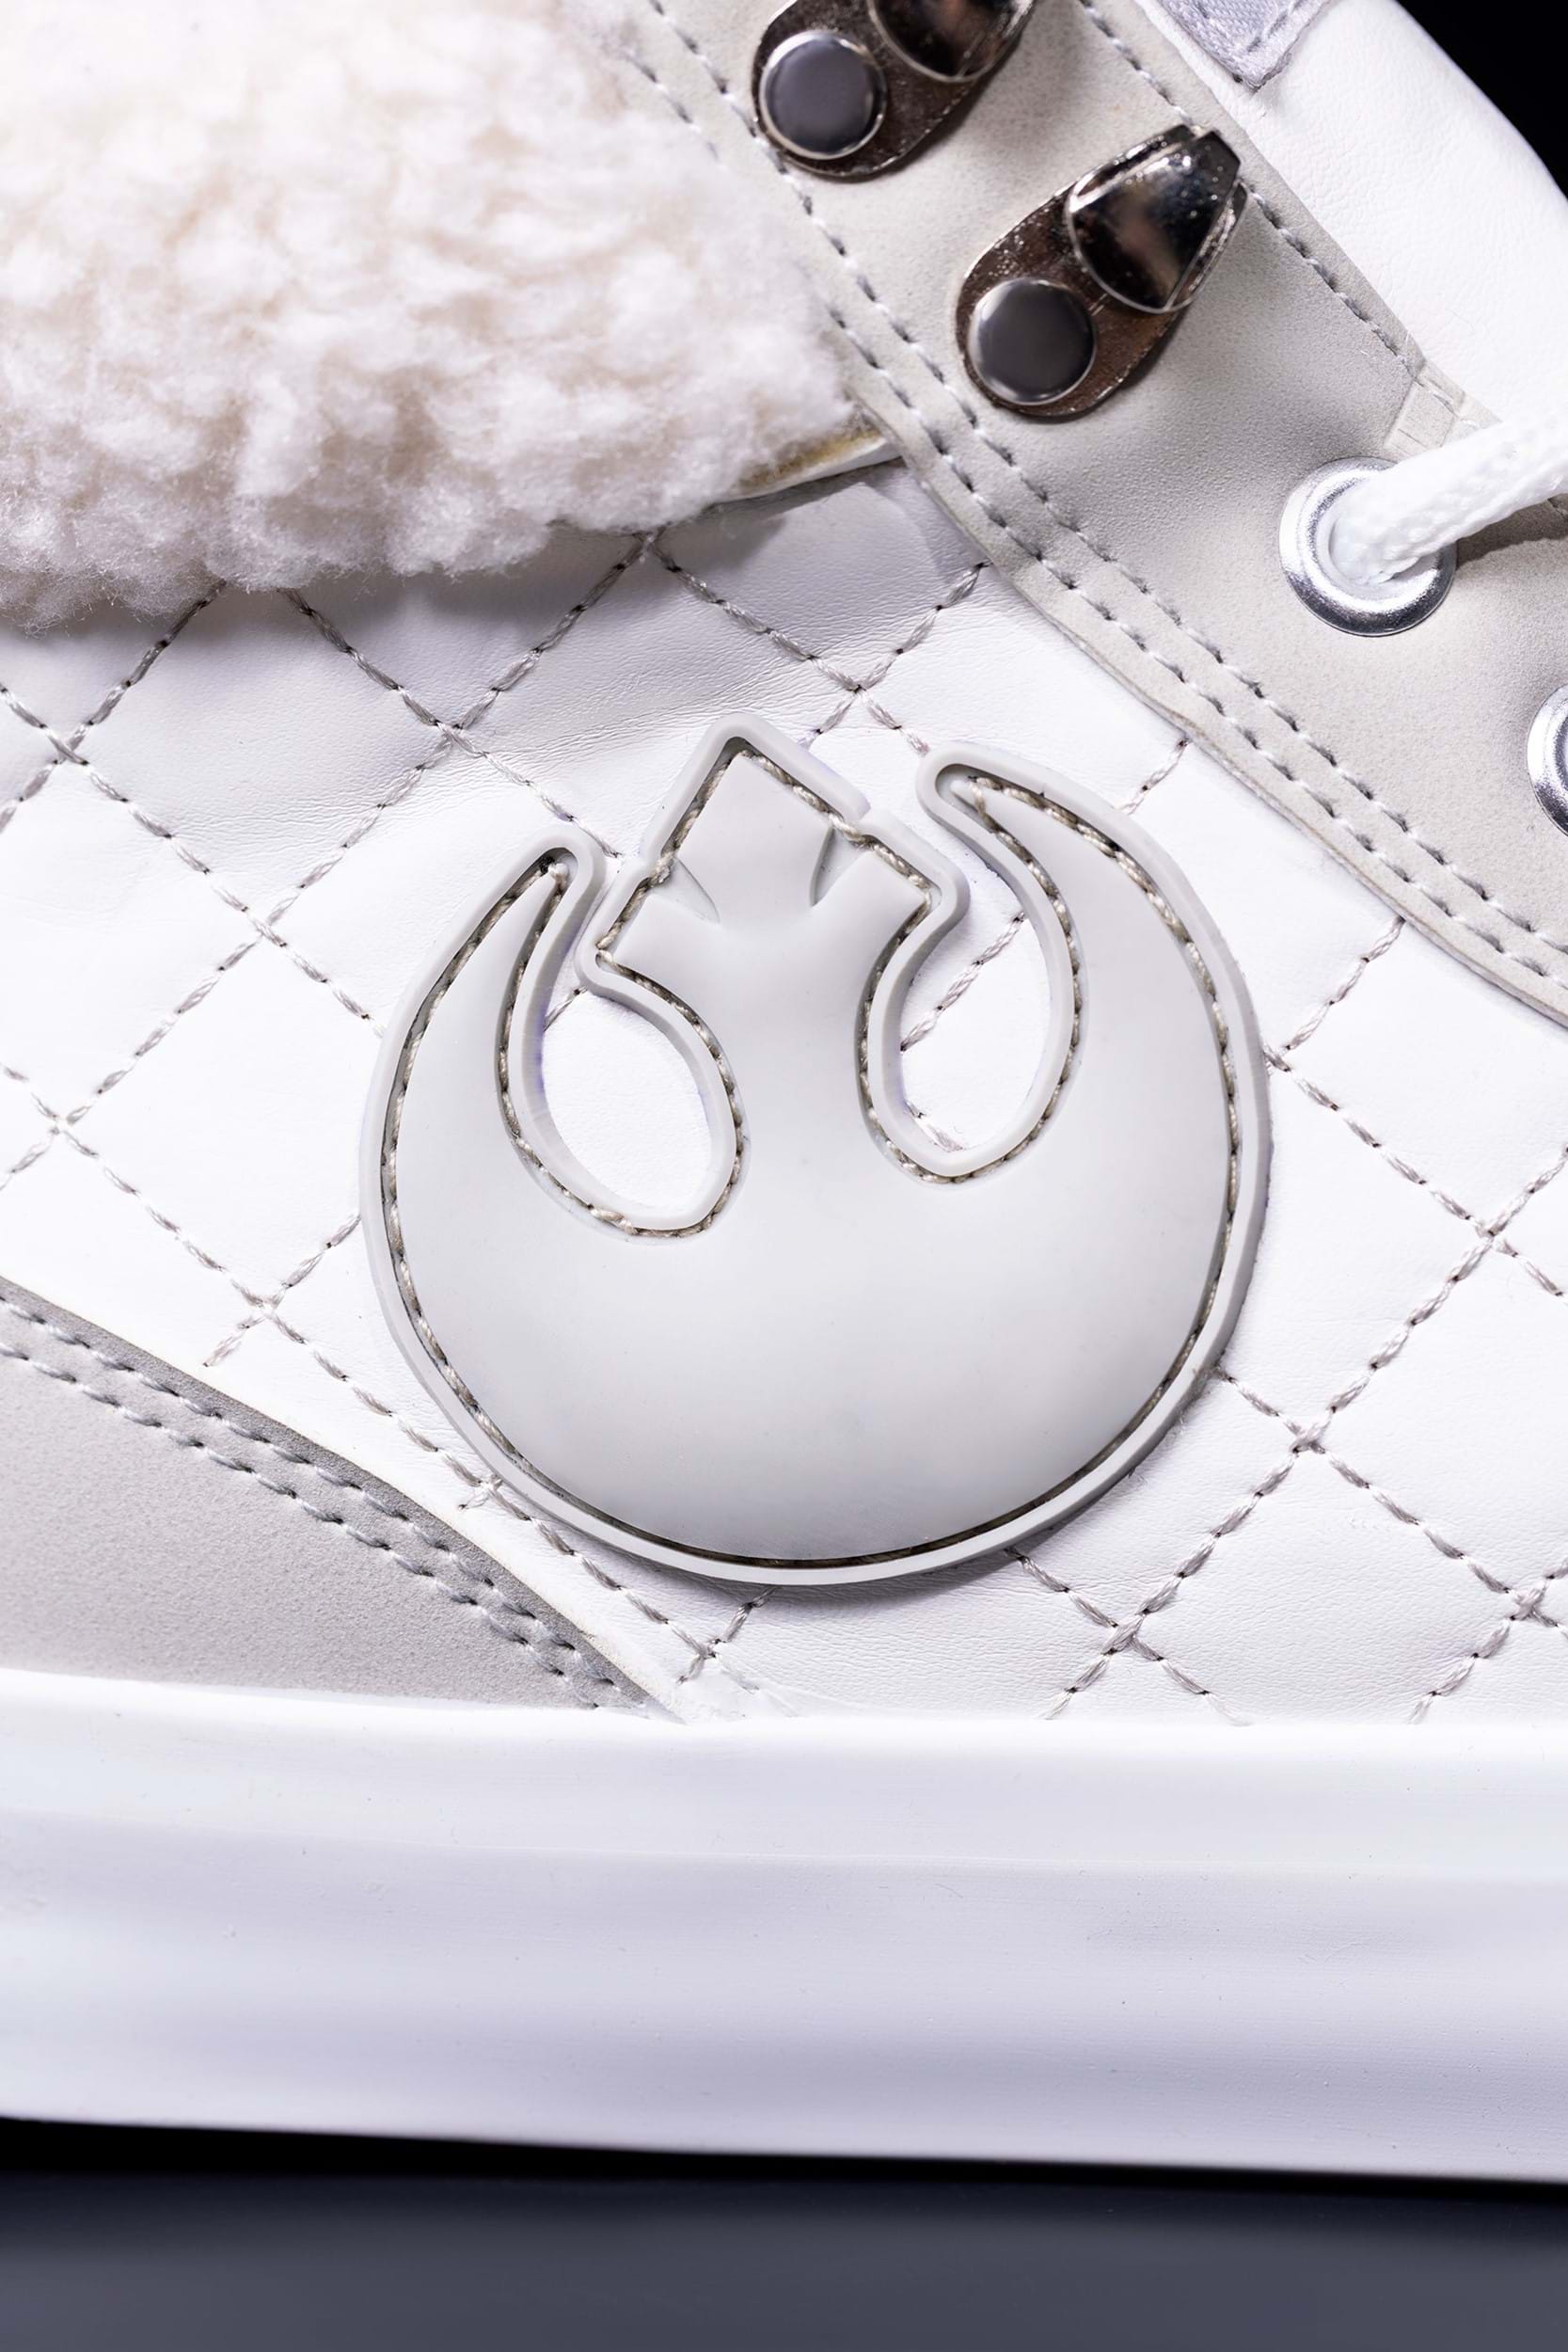 Star Wars Rebel Leia Women's Hoth Sneakers